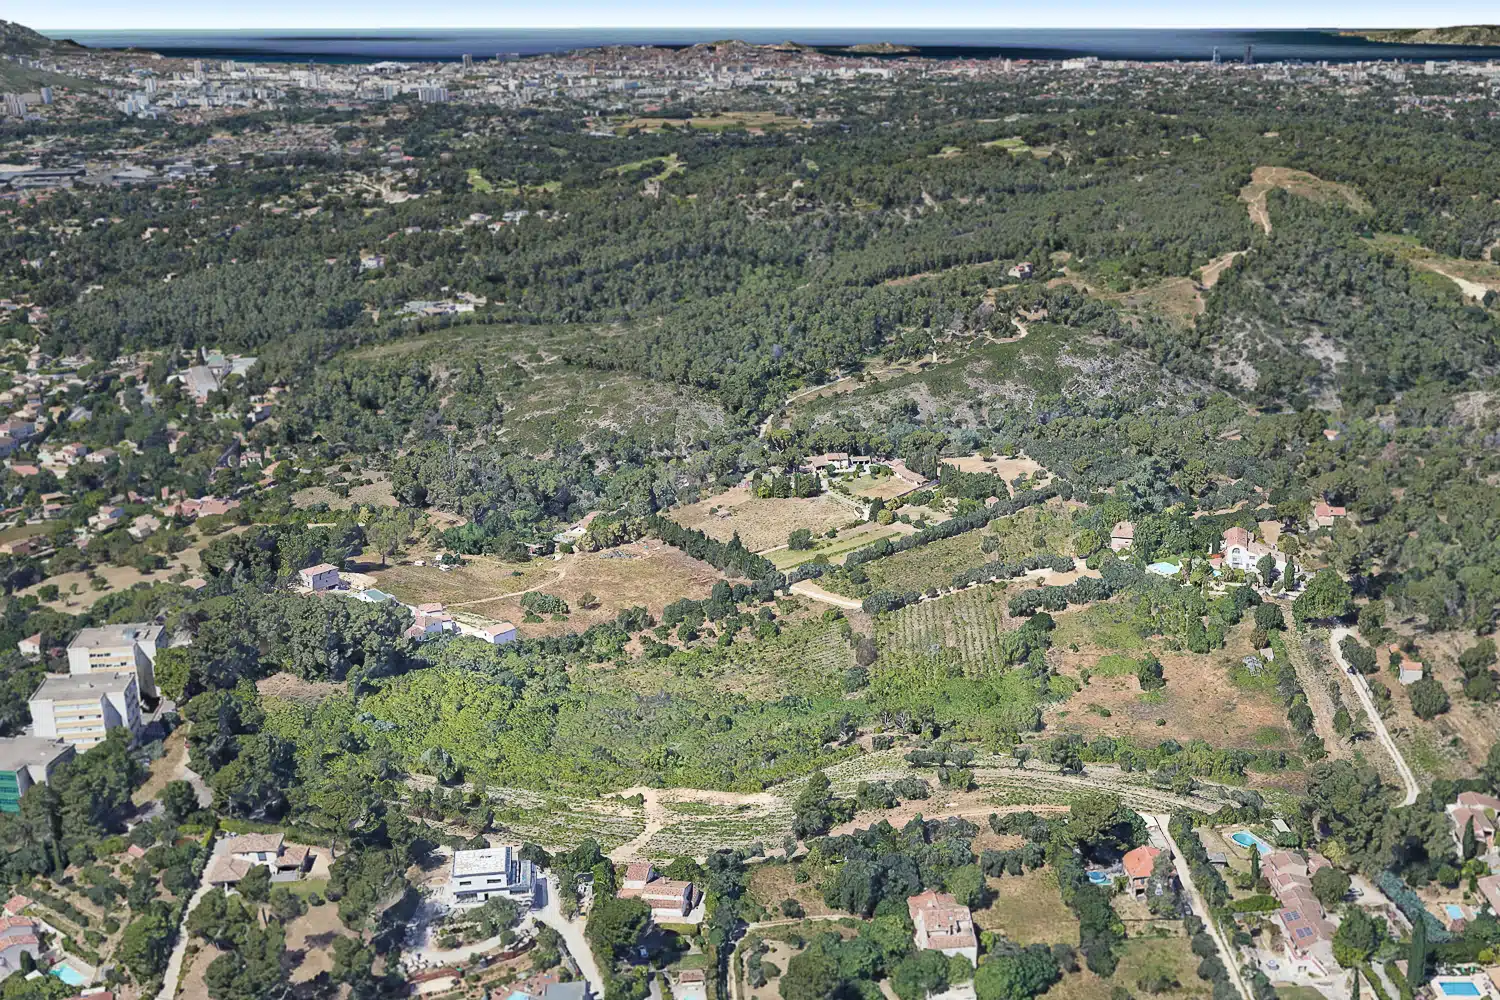 tiers-lieu, Un tiers-lieu agroécologique innovant va pousser vers Château-Gombert, Made in Marseille